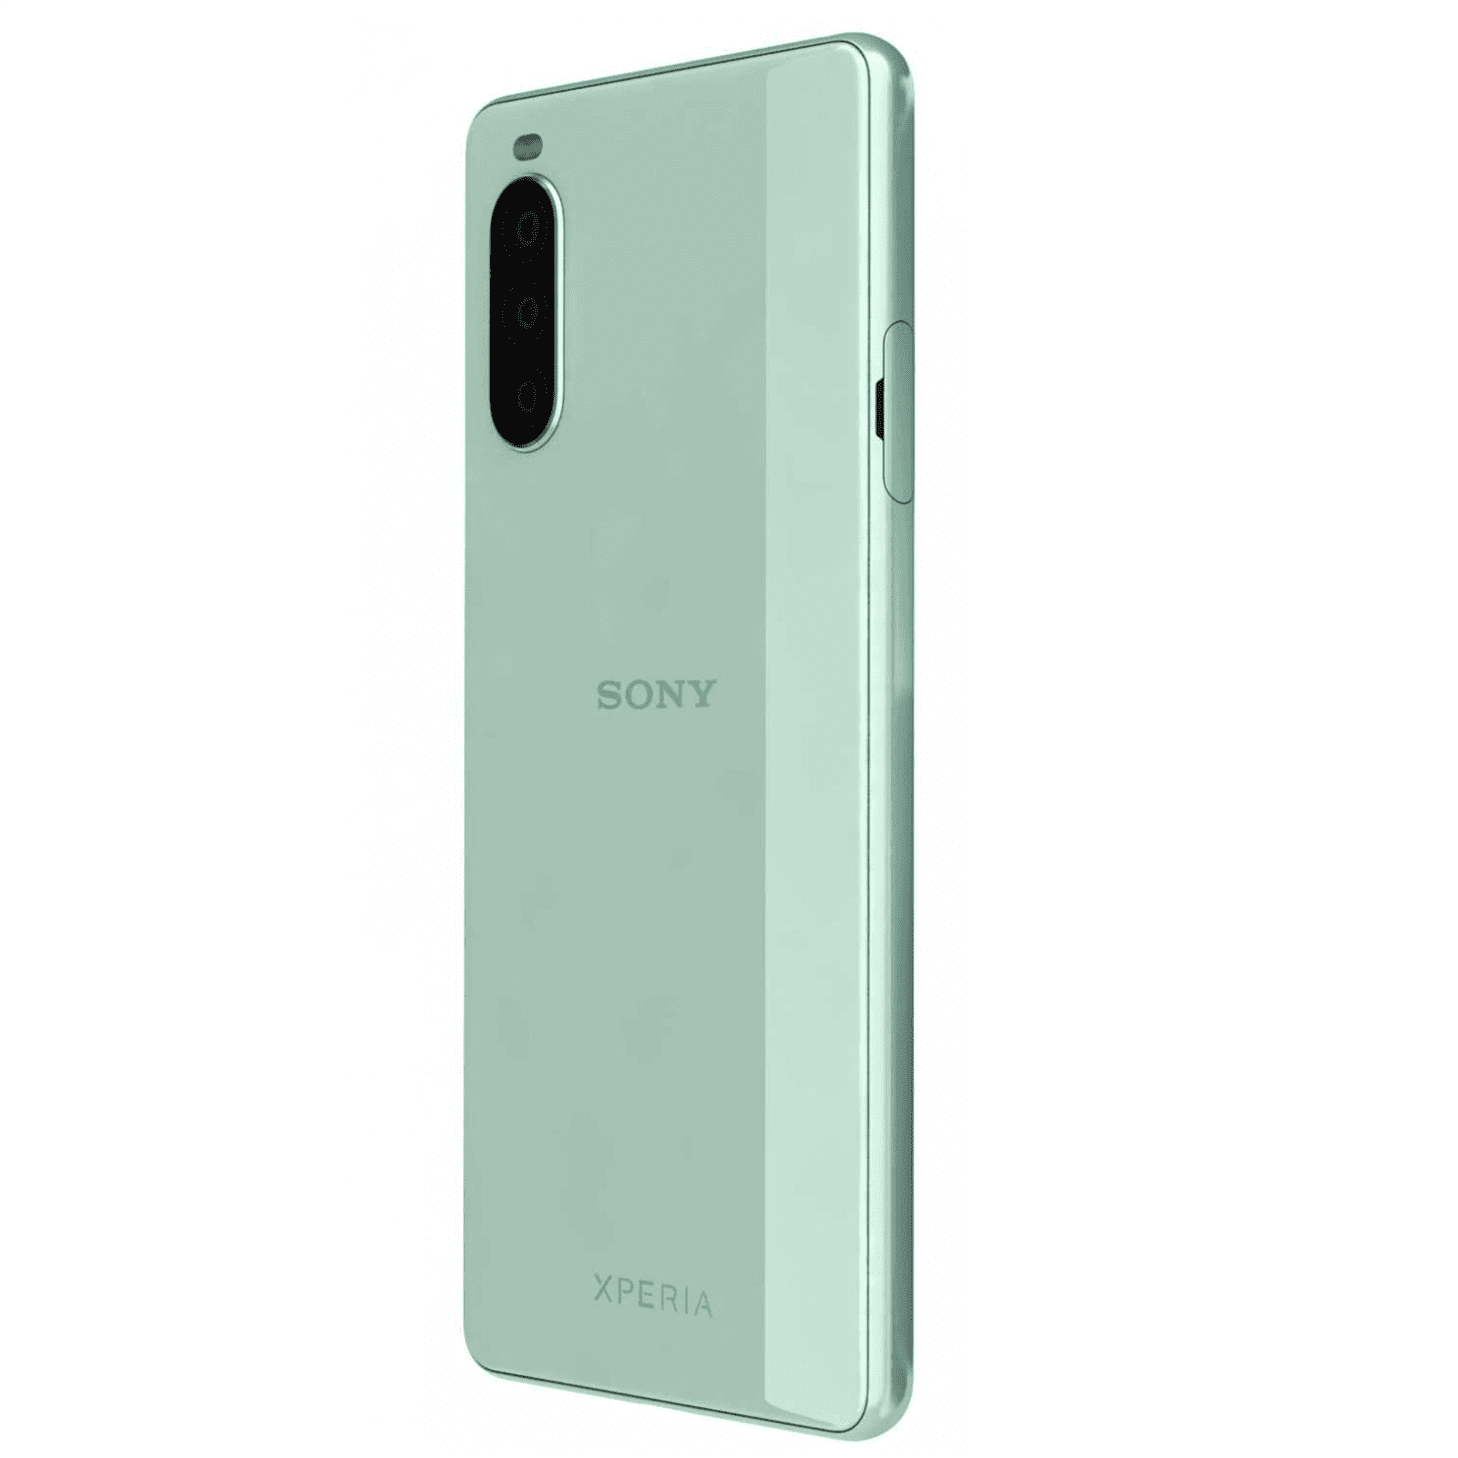 Sony Xperia 10 II 128GB XQ-AU52 Dual SIM GSM Factory Unlocked Phone - Mint  Green